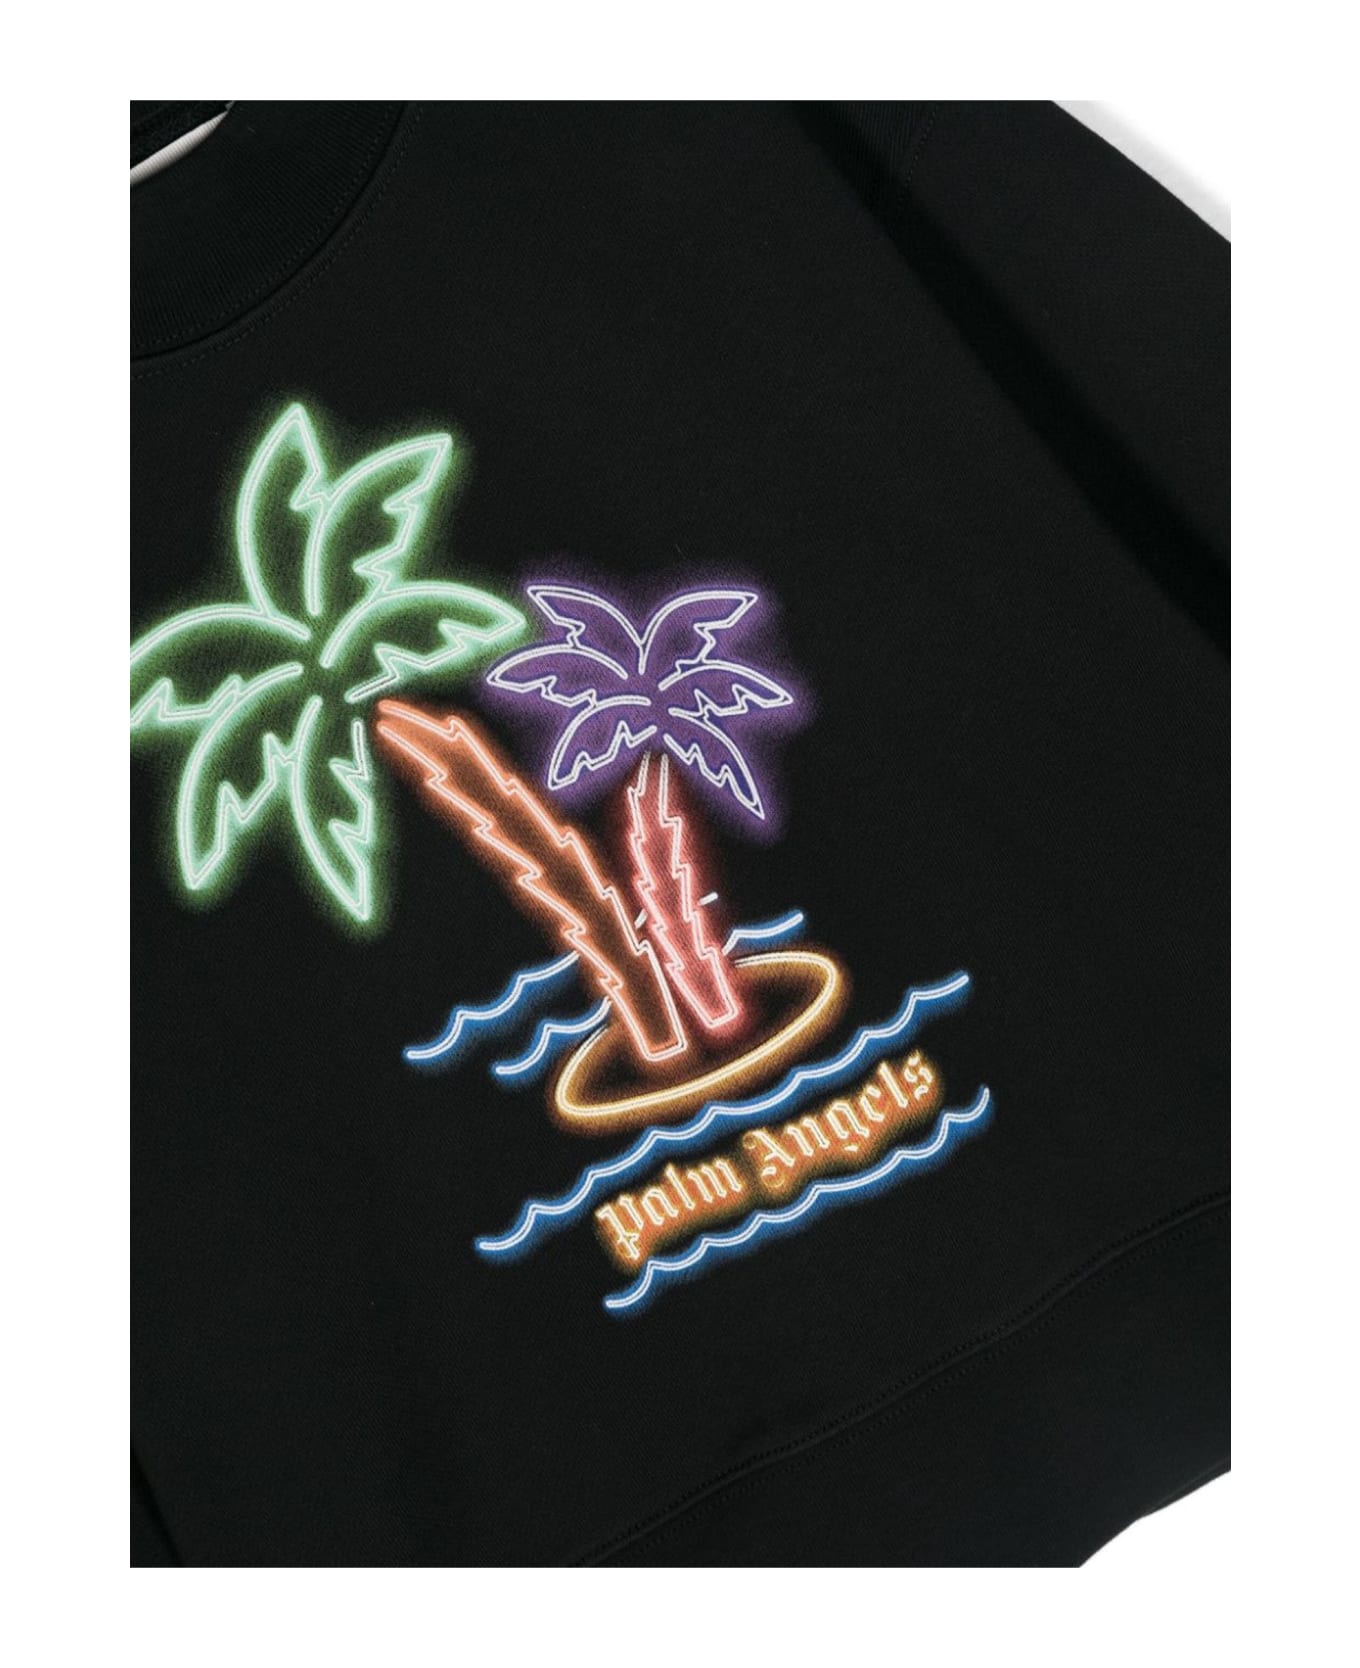 Palm Angels Sweaters Black - Black ニットウェア＆スウェットシャツ